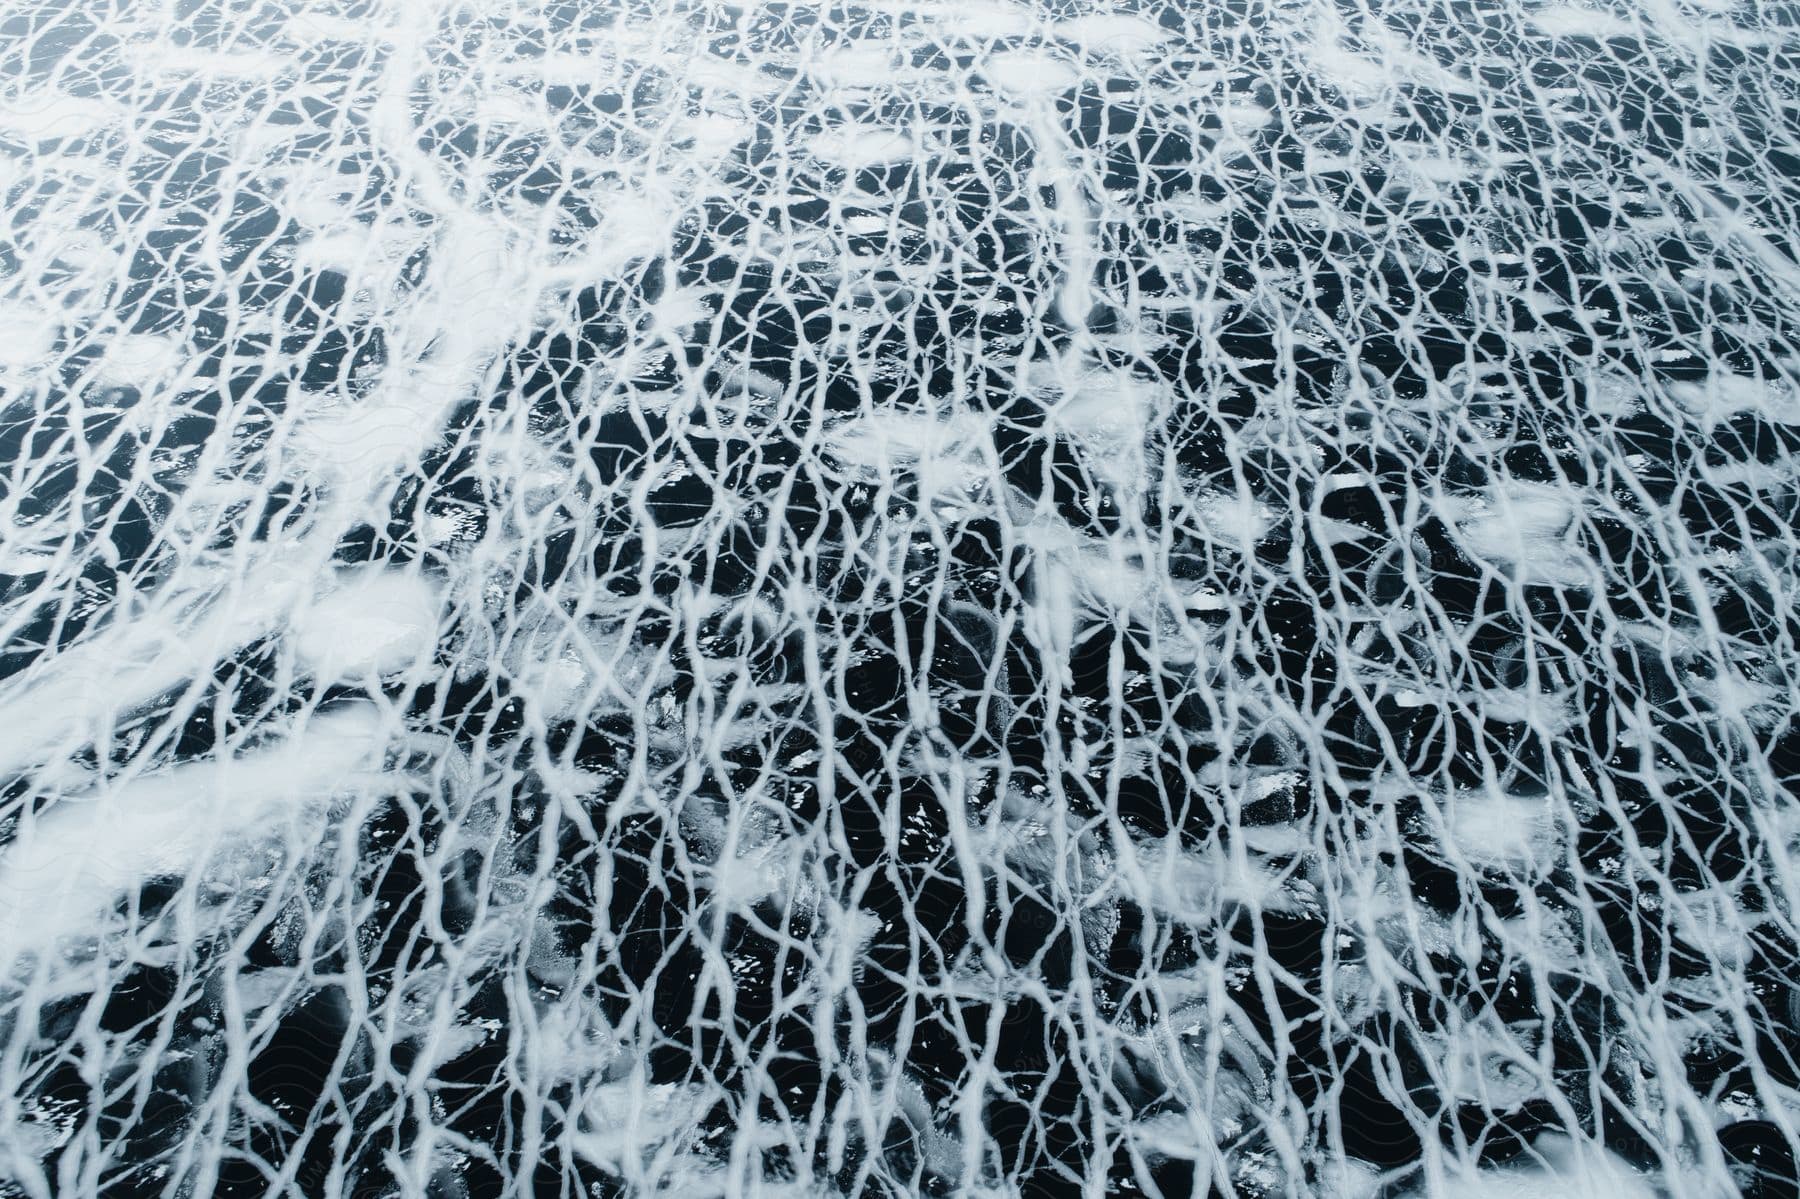 Streaks of white liquid cover a dark surface